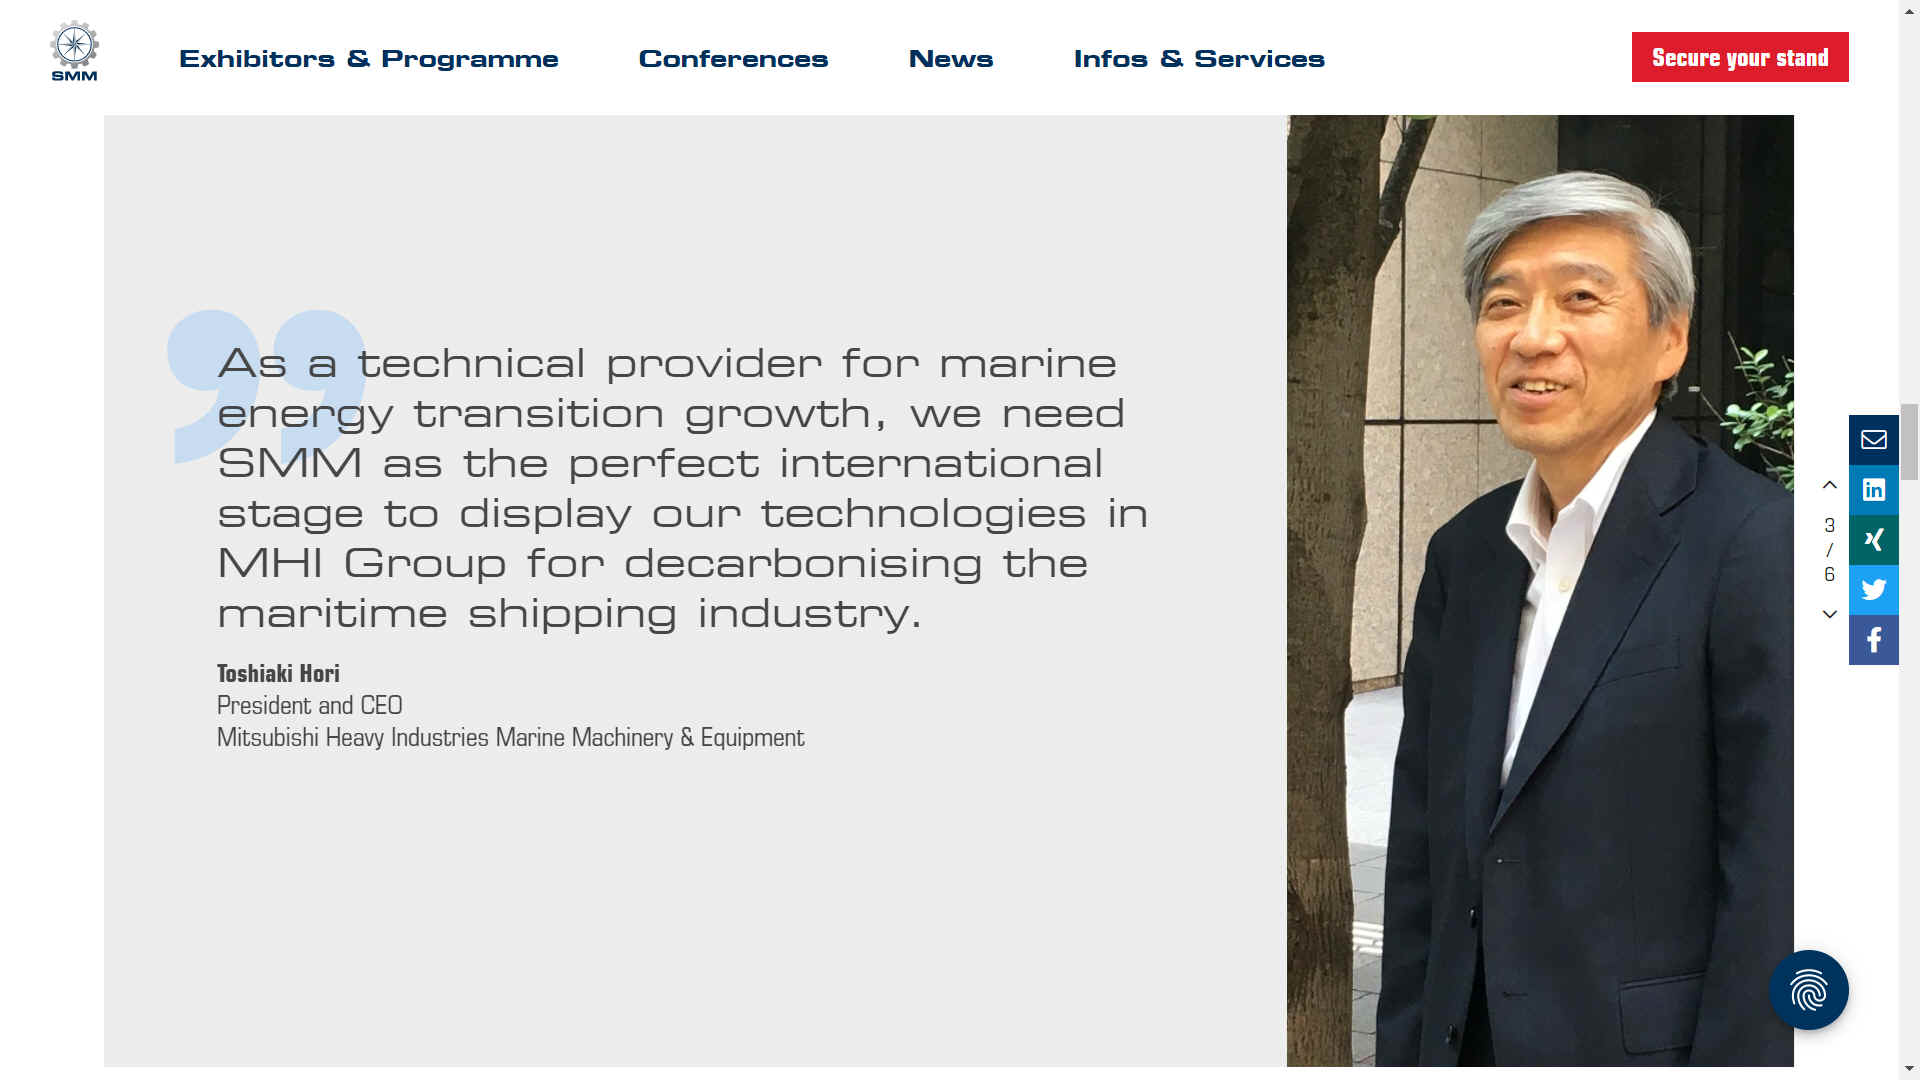 Toshiaki Hori - President & CEO Mitsubishi Heavy Industries Marine Machinery & Equipment